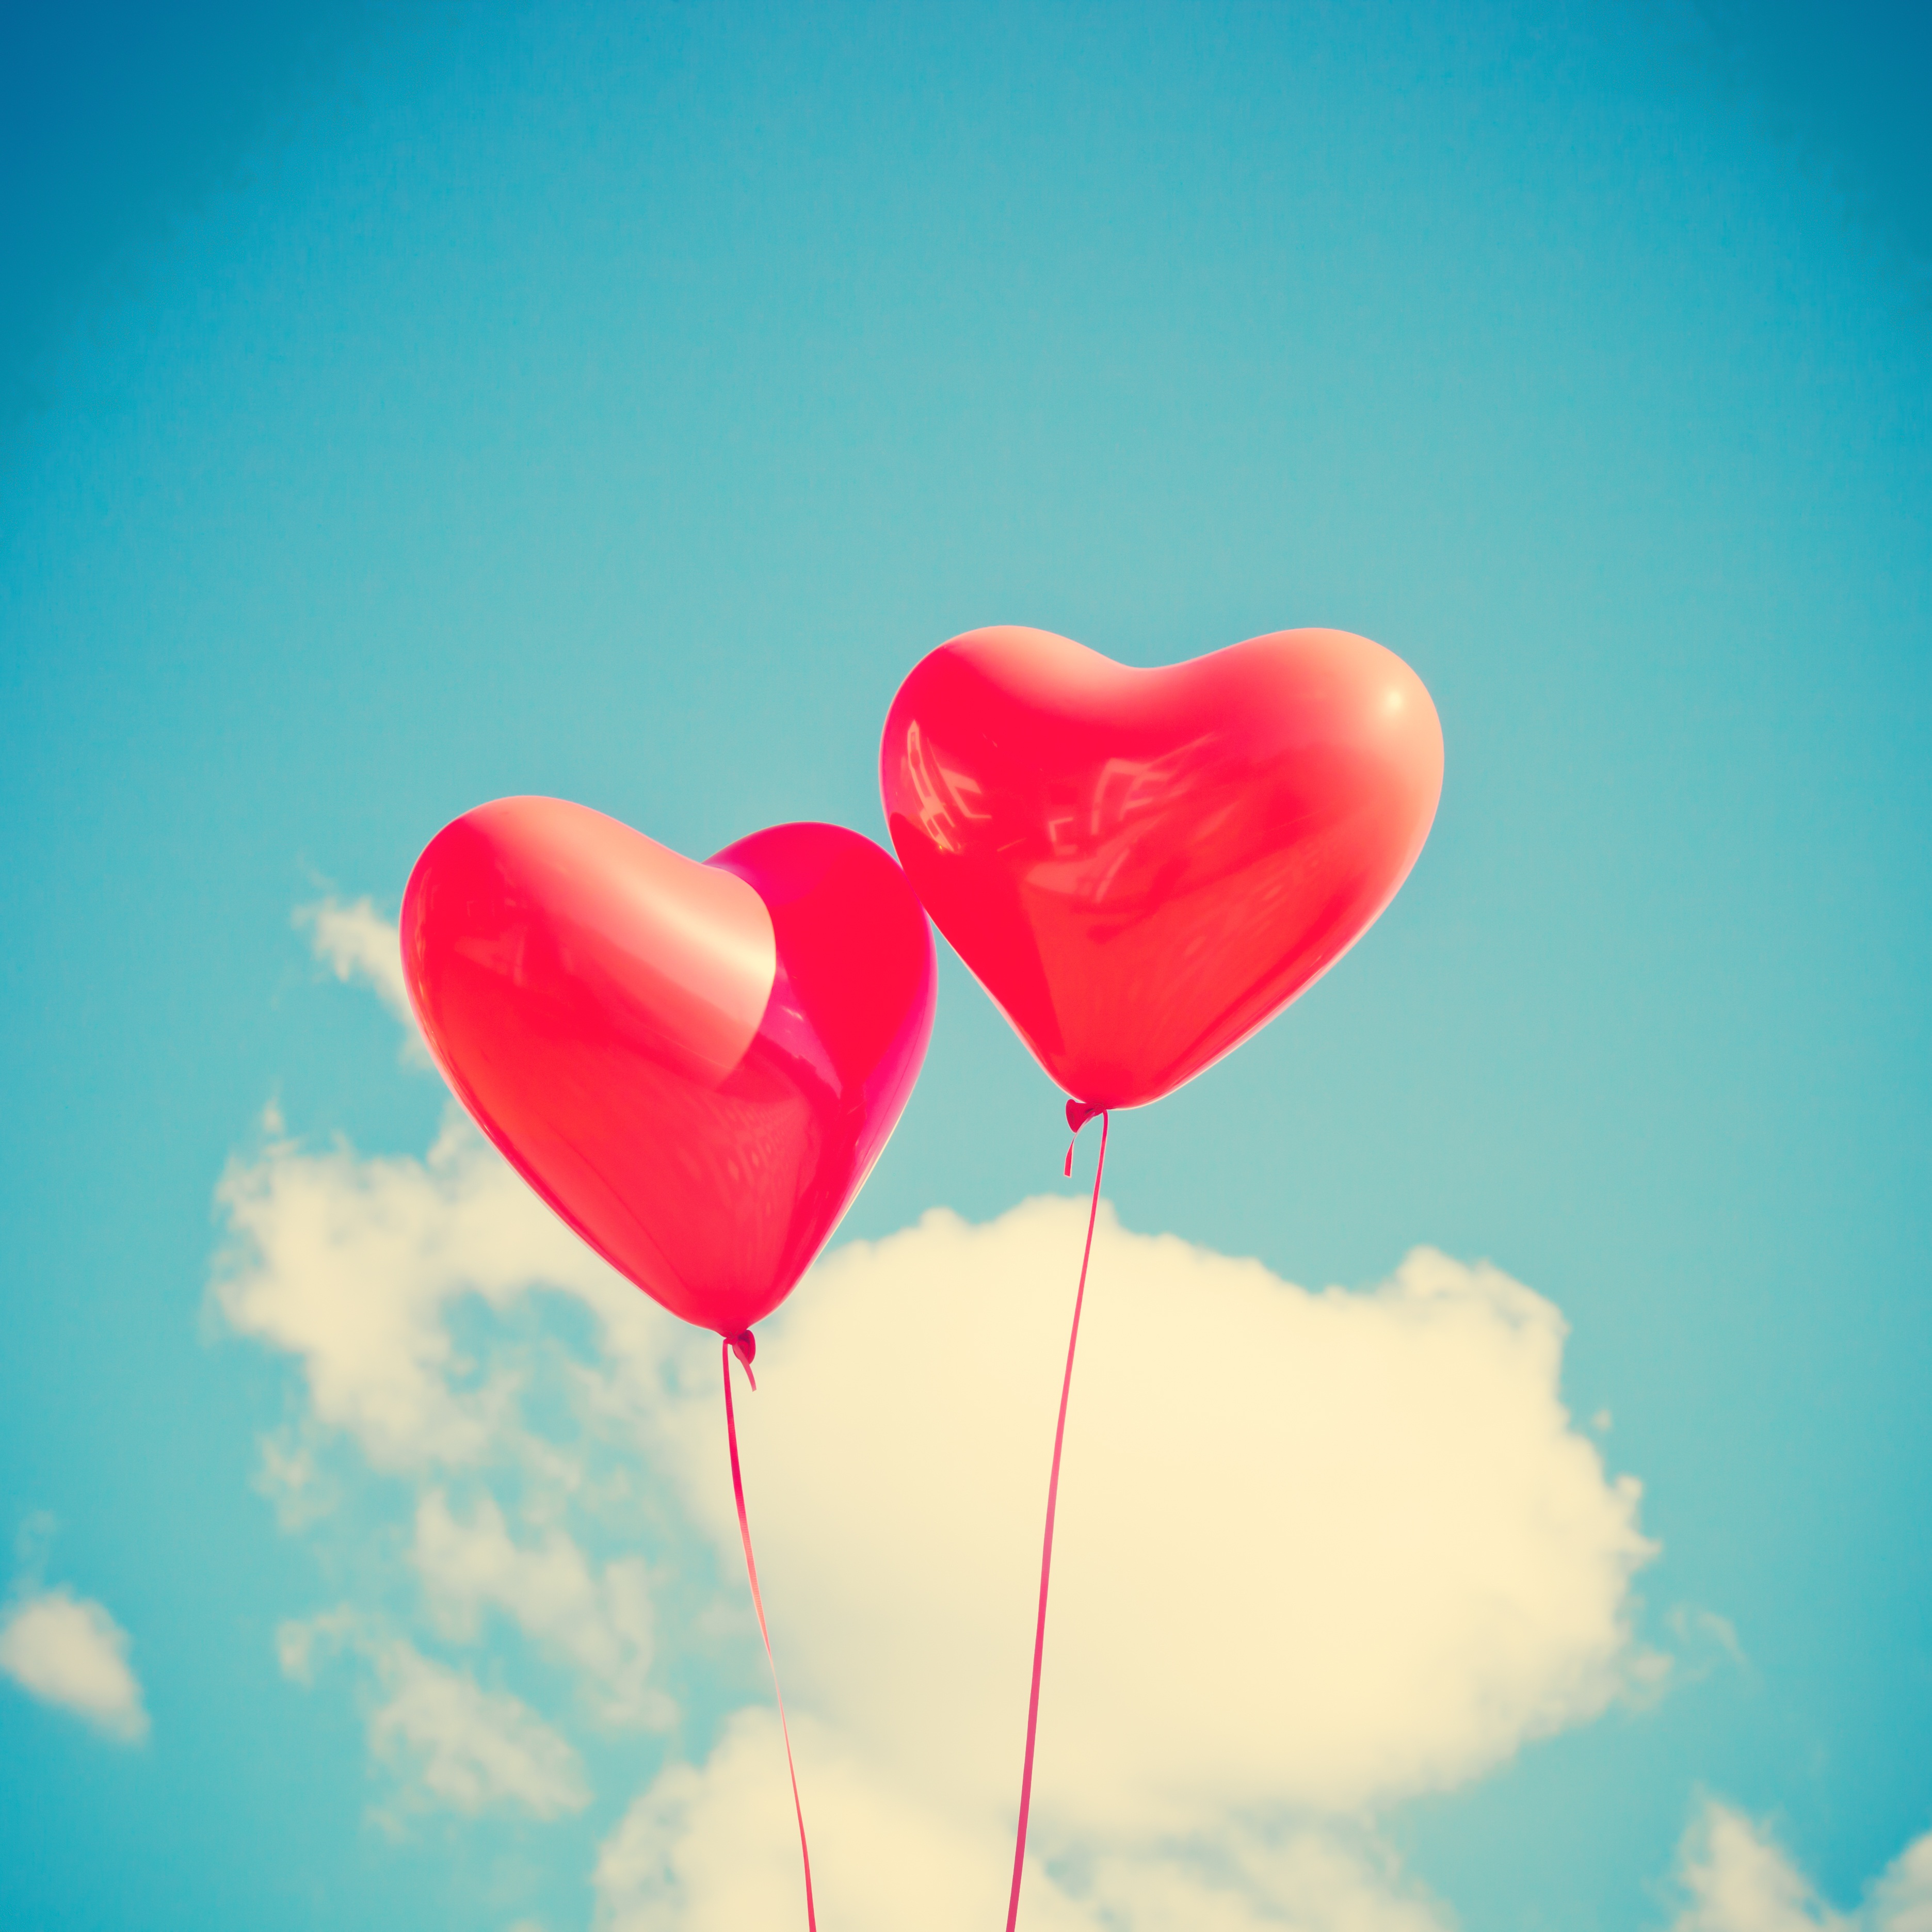 heart, balloons, love, sky, ease